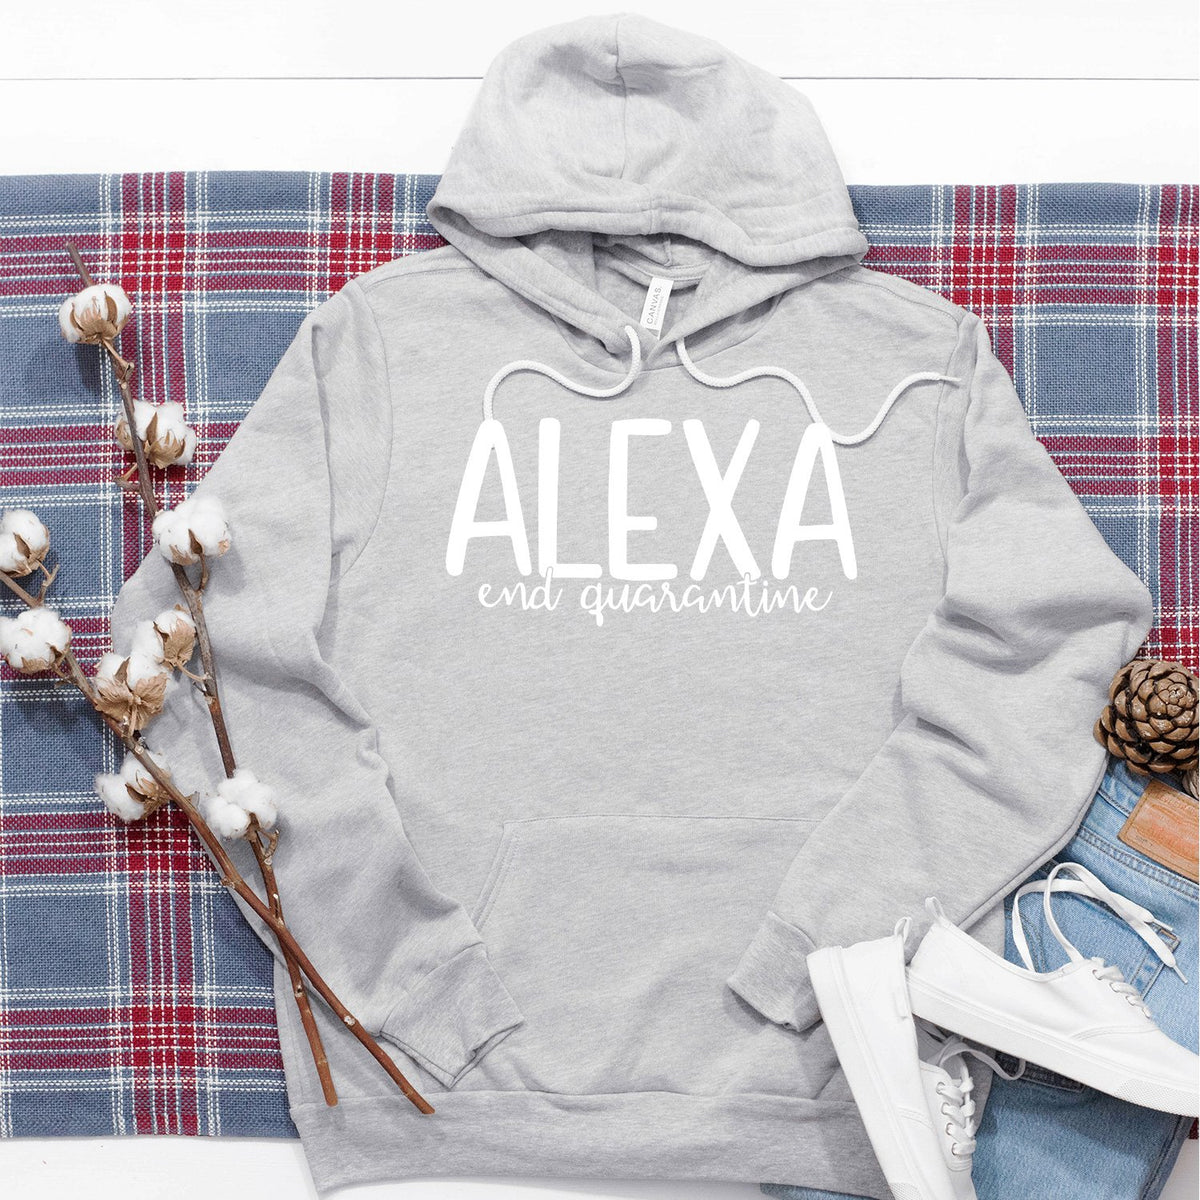 Alexa End Quarantine - Hoodie Sweatshirt